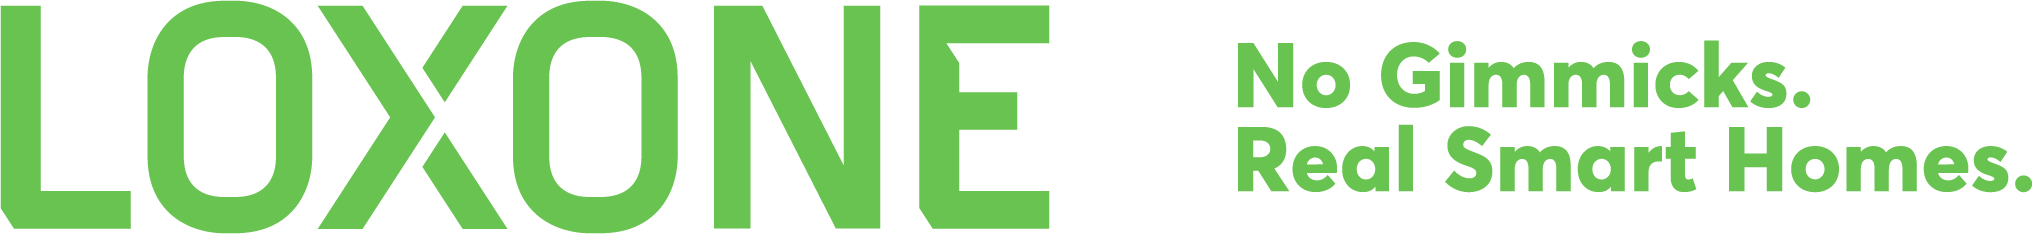 Logo-Loxone-Slogan-green-RGB-XL-1png